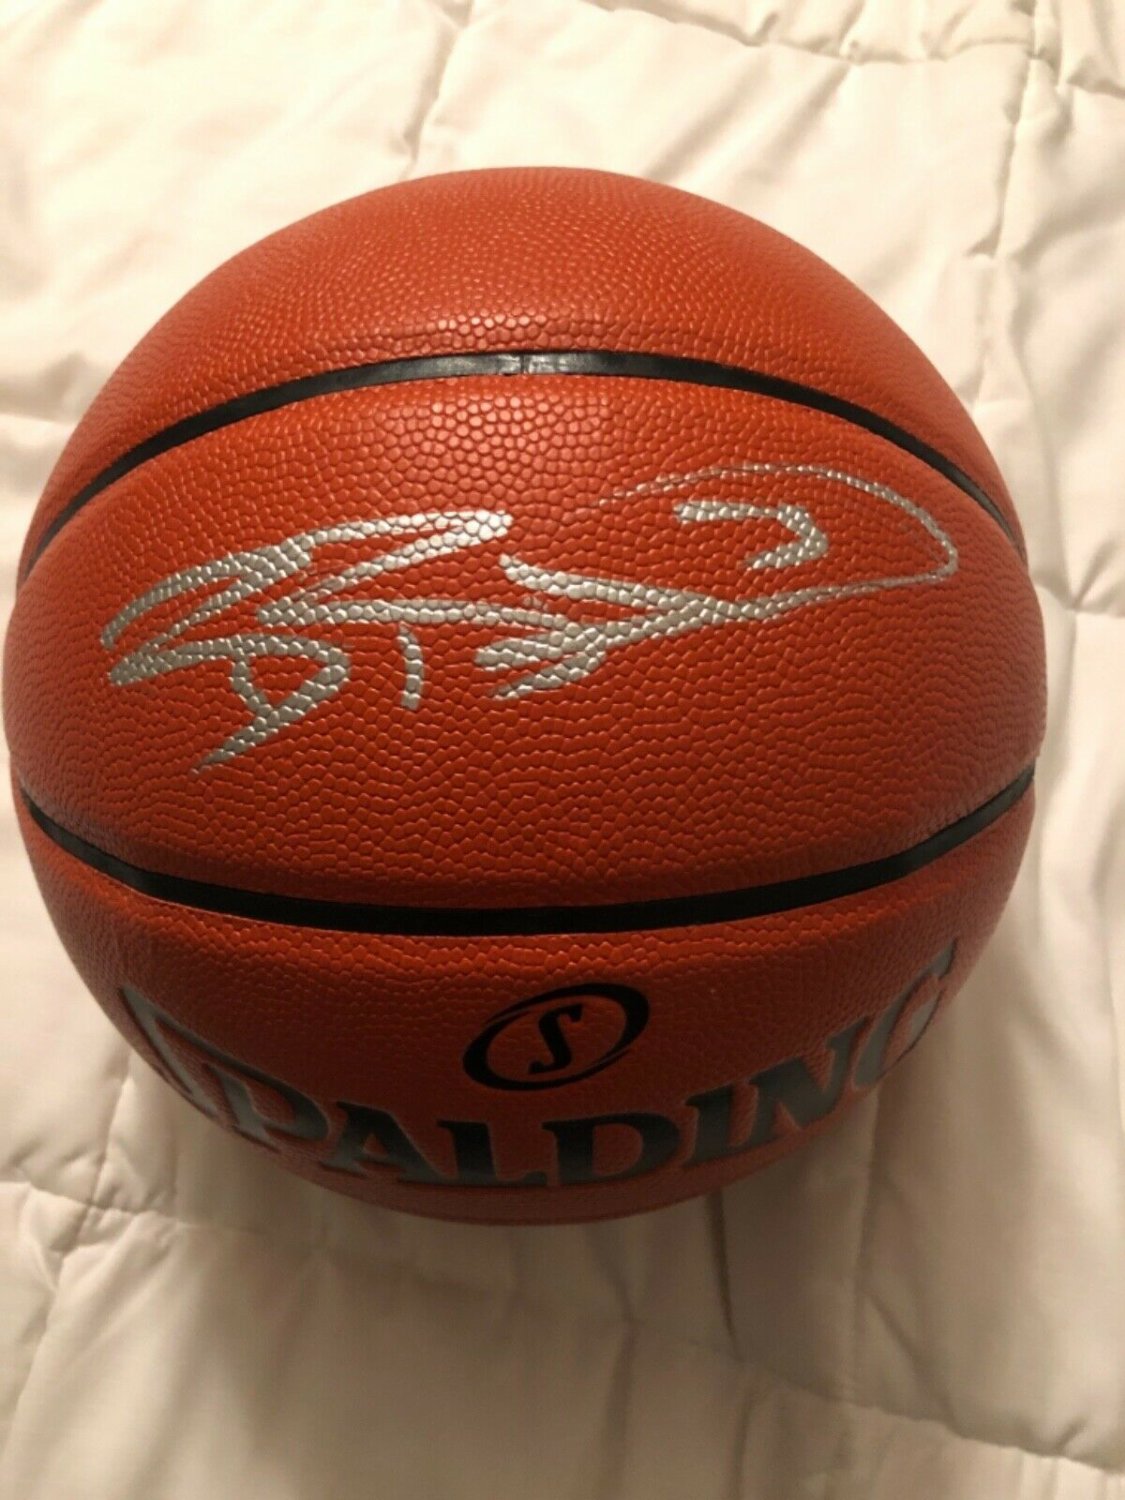 Bradley Beal Autographed Signed Spalding NBA Basketball JSA Autograph